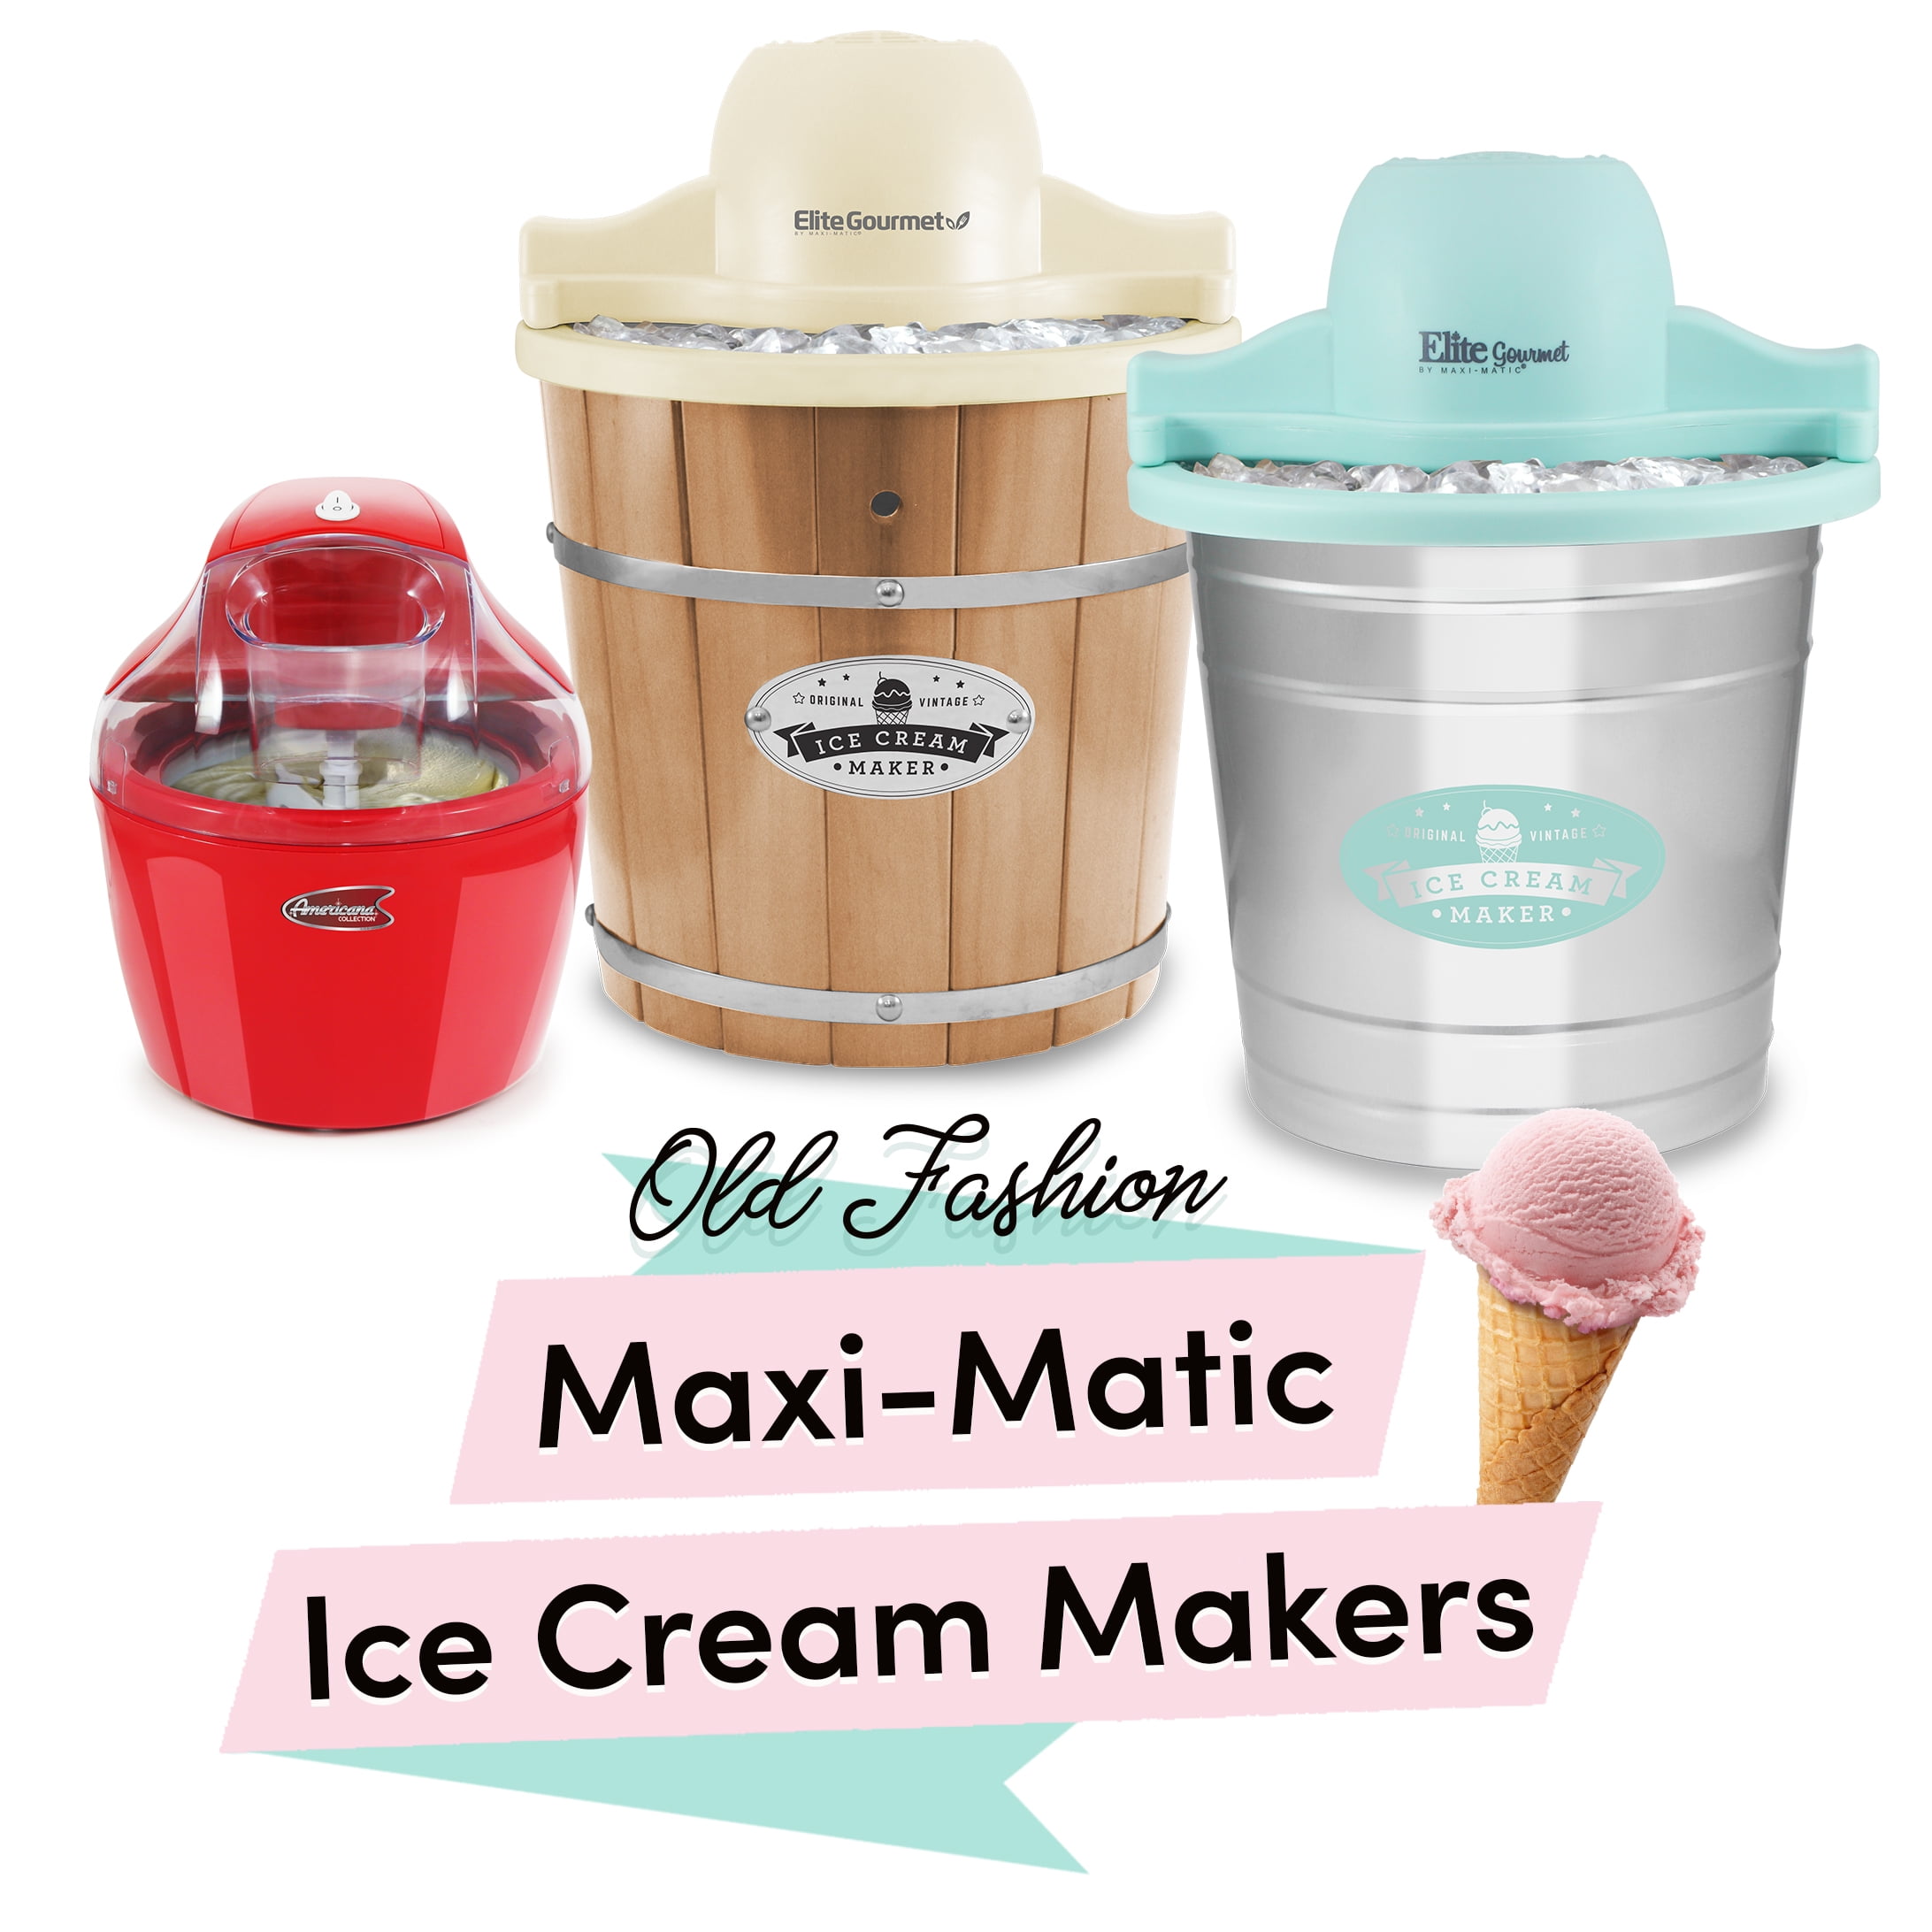 Elite Gourmet Americana 1.5 qt Electric Ice Cream Maker with Quick